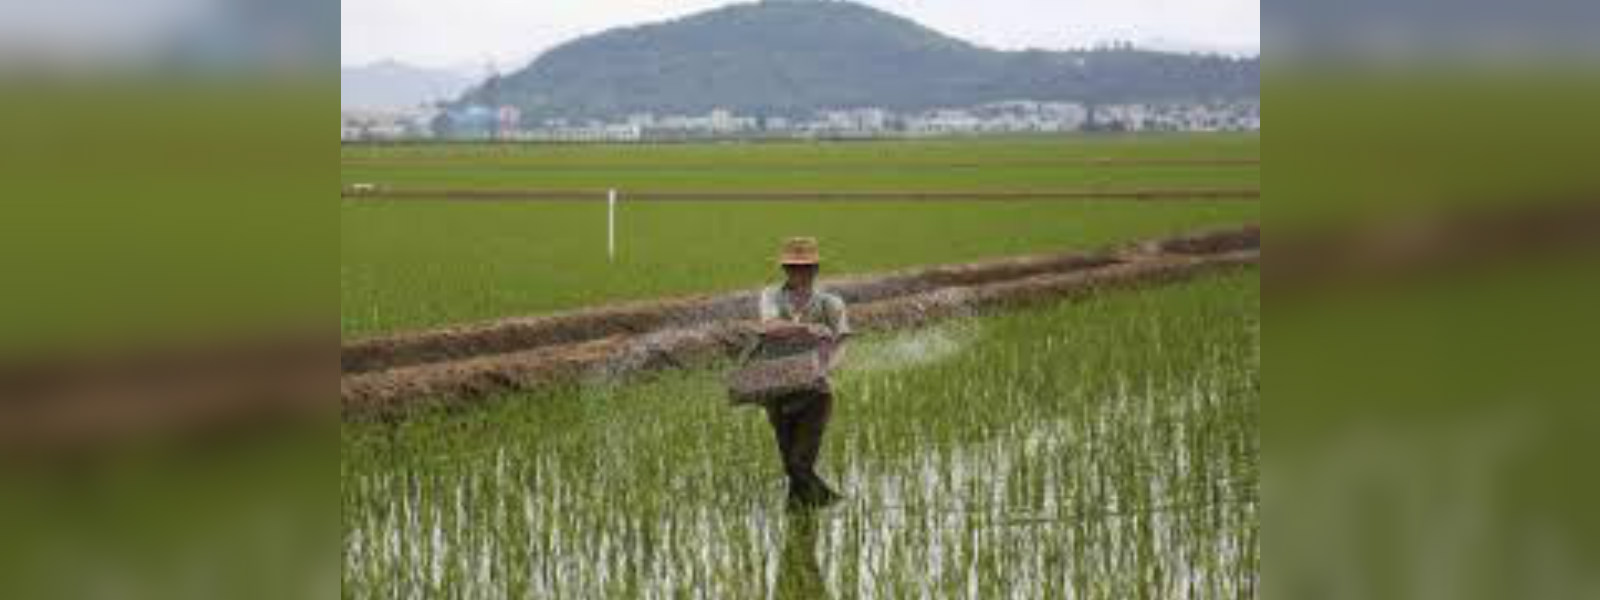 North Korea plants rice as UN warns of food crisis